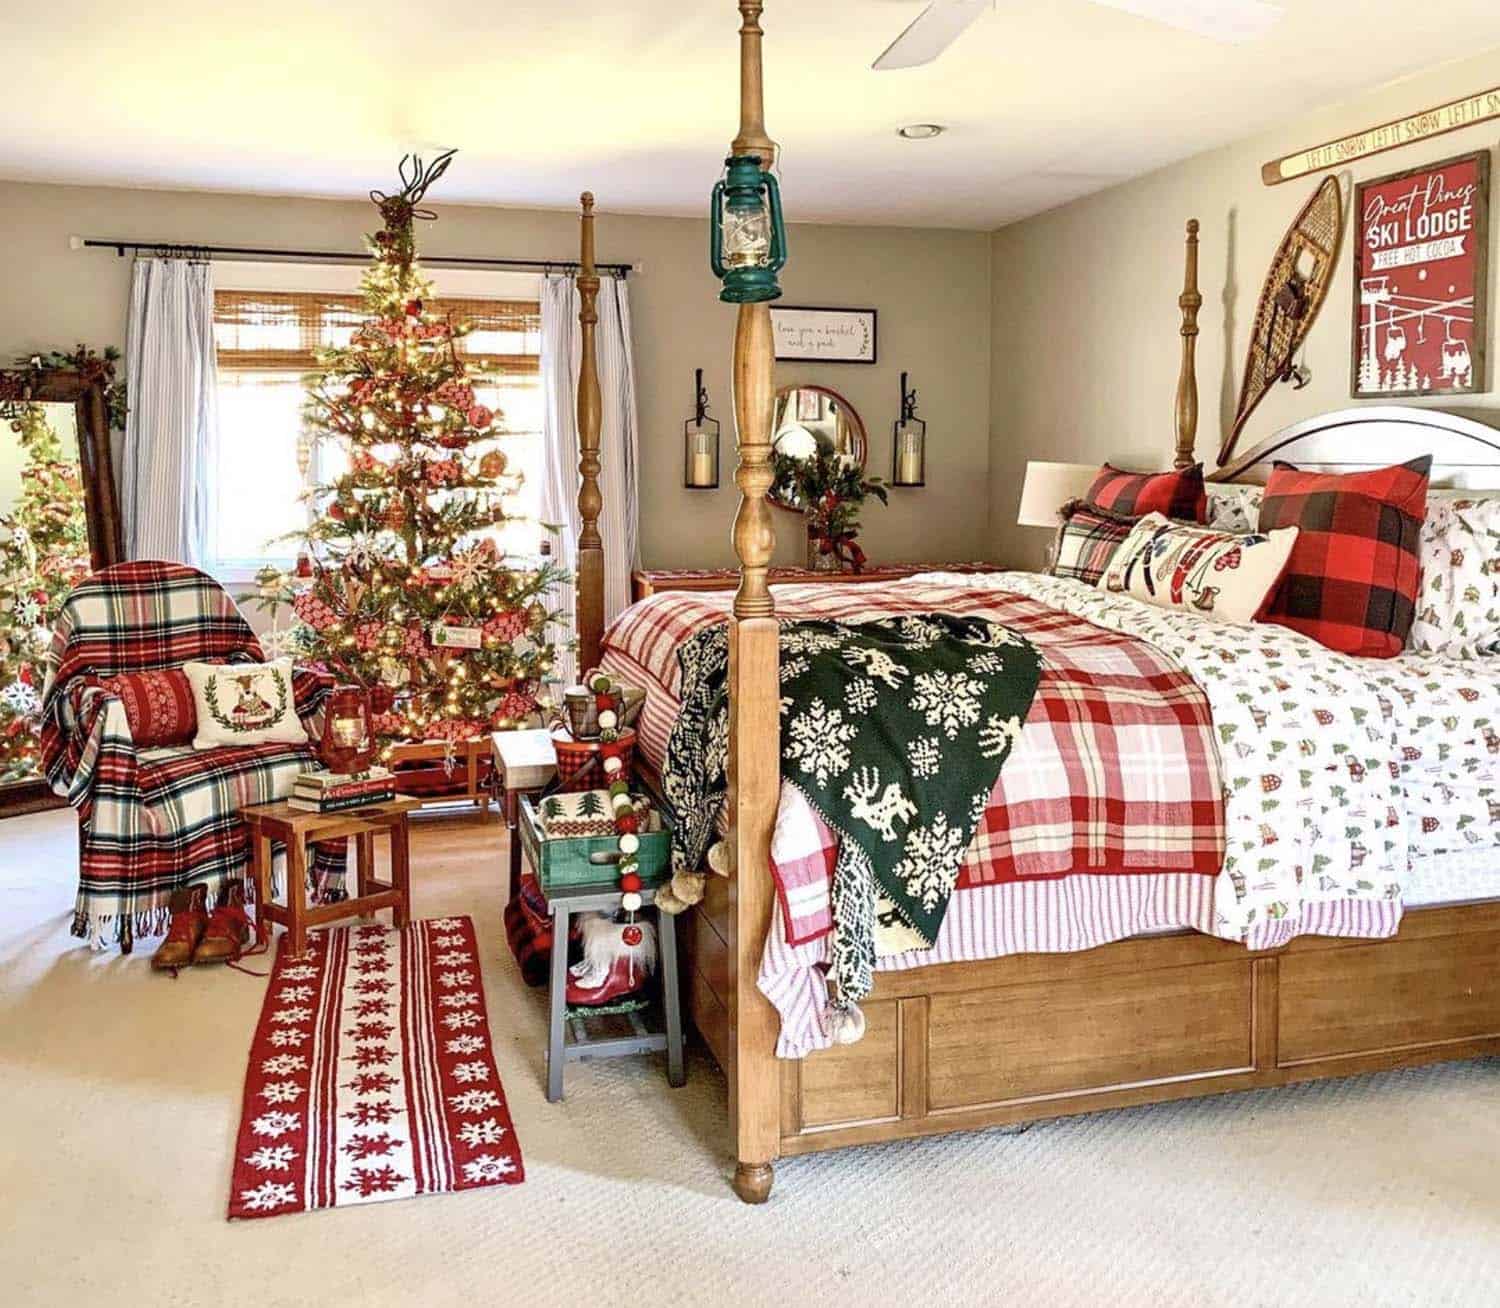 bedroom decorated like a ski lodge for Christmas